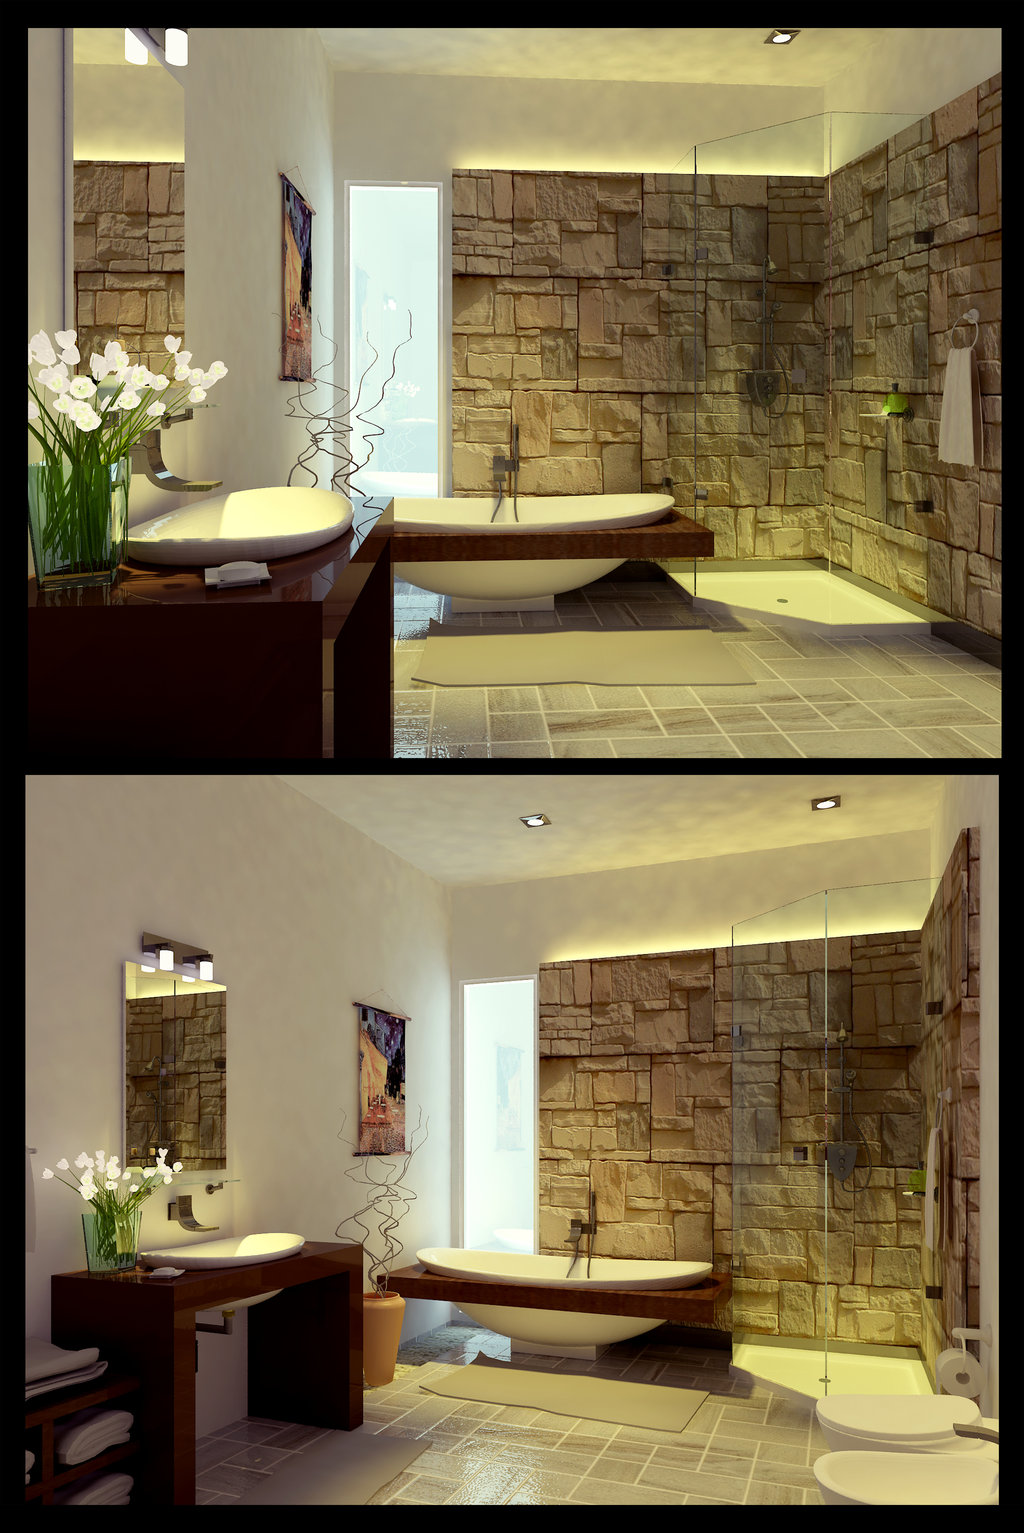 Ideas for the design of modern bathrooms "width =" 1024 "height =" 1533 "srcset =" https://mileray.com/wp-content/uploads/2020/05/1588515291_37_Inspiration-To-Decor-Modern-Bathroom-Design-Ideas-Bring-a-Beauty.jpg 1024w, https://mileray.com / wp -content / uploads / 2016/09 / arkiden124-200x300.jpg 200w, https://mileray.com/wp-content/uploads/2016/09/arkiden124-768x1150.jpg 768w, https://mileray.com / wp -content / uploads / 2016/09 / arkiden124-684x1024.jpg 684w, https://mileray.com/wp-content/uploads/2016/09/arkiden124-696x1042.jpg 696w, https://mileray.com / wp -content / uploads / 2016/09 / arkiden124-281x420.jpg 281w "sizes =" (maximum width: 1024px) 100vw, 1024px